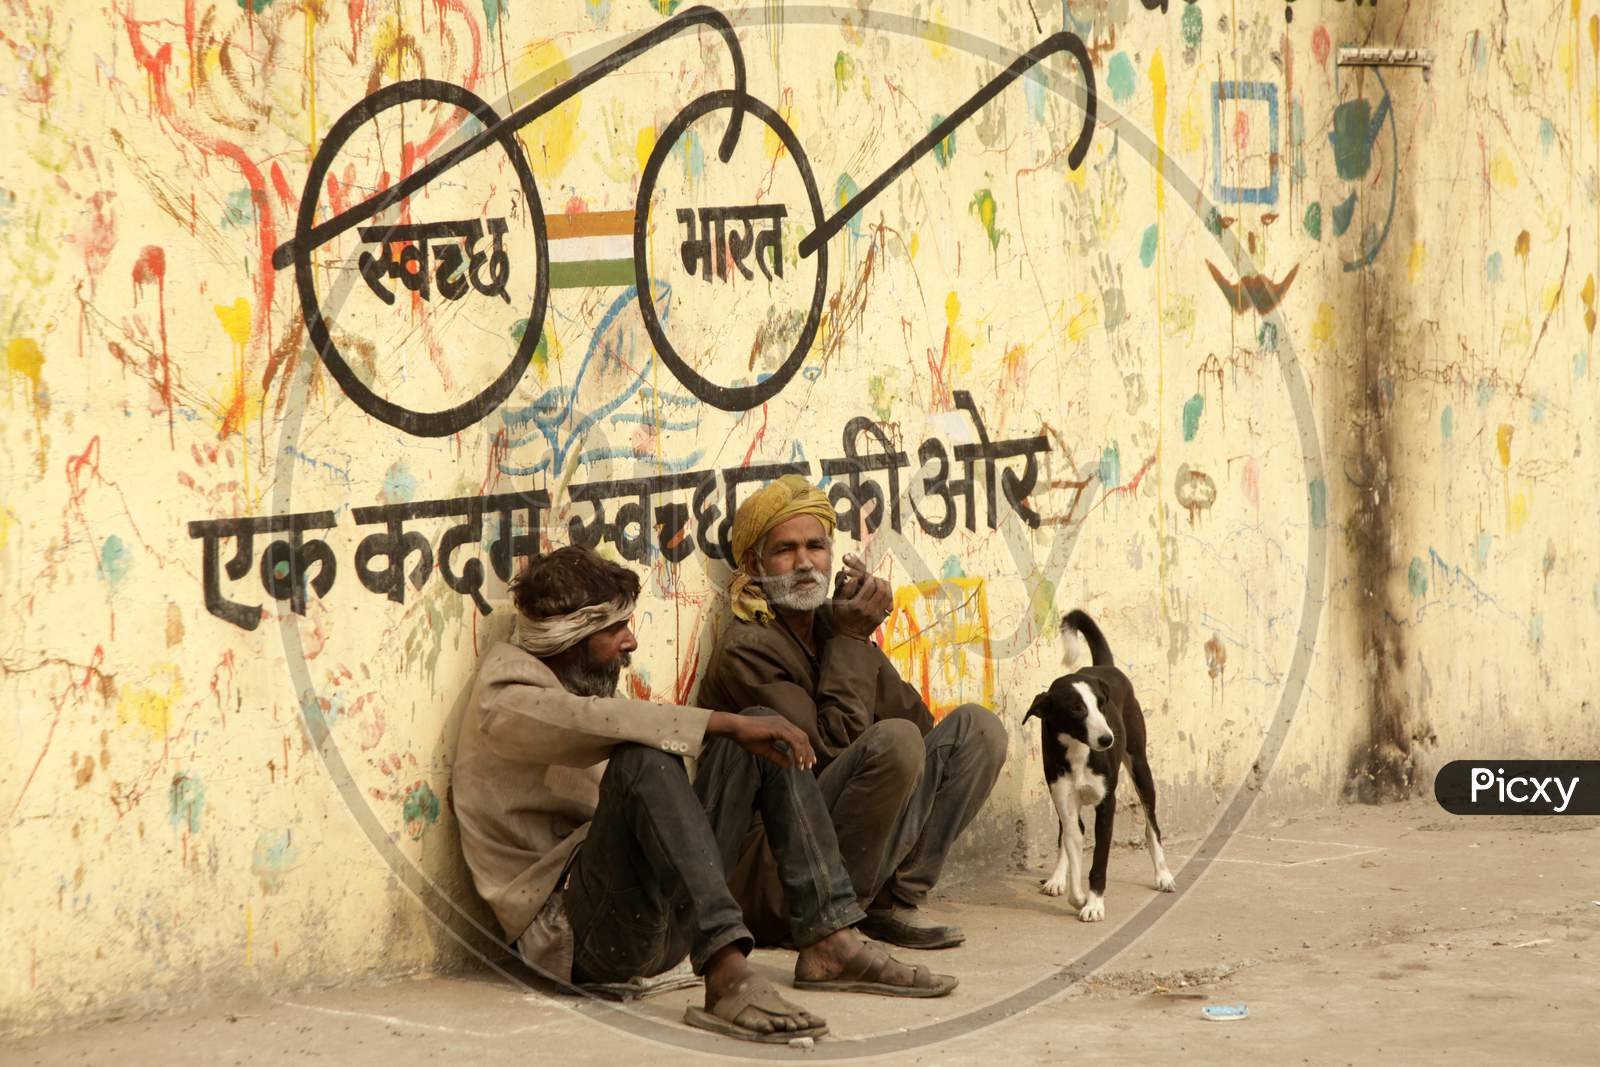 A couple of Men's sat alongside a wall with Swachh Bharath Written on it